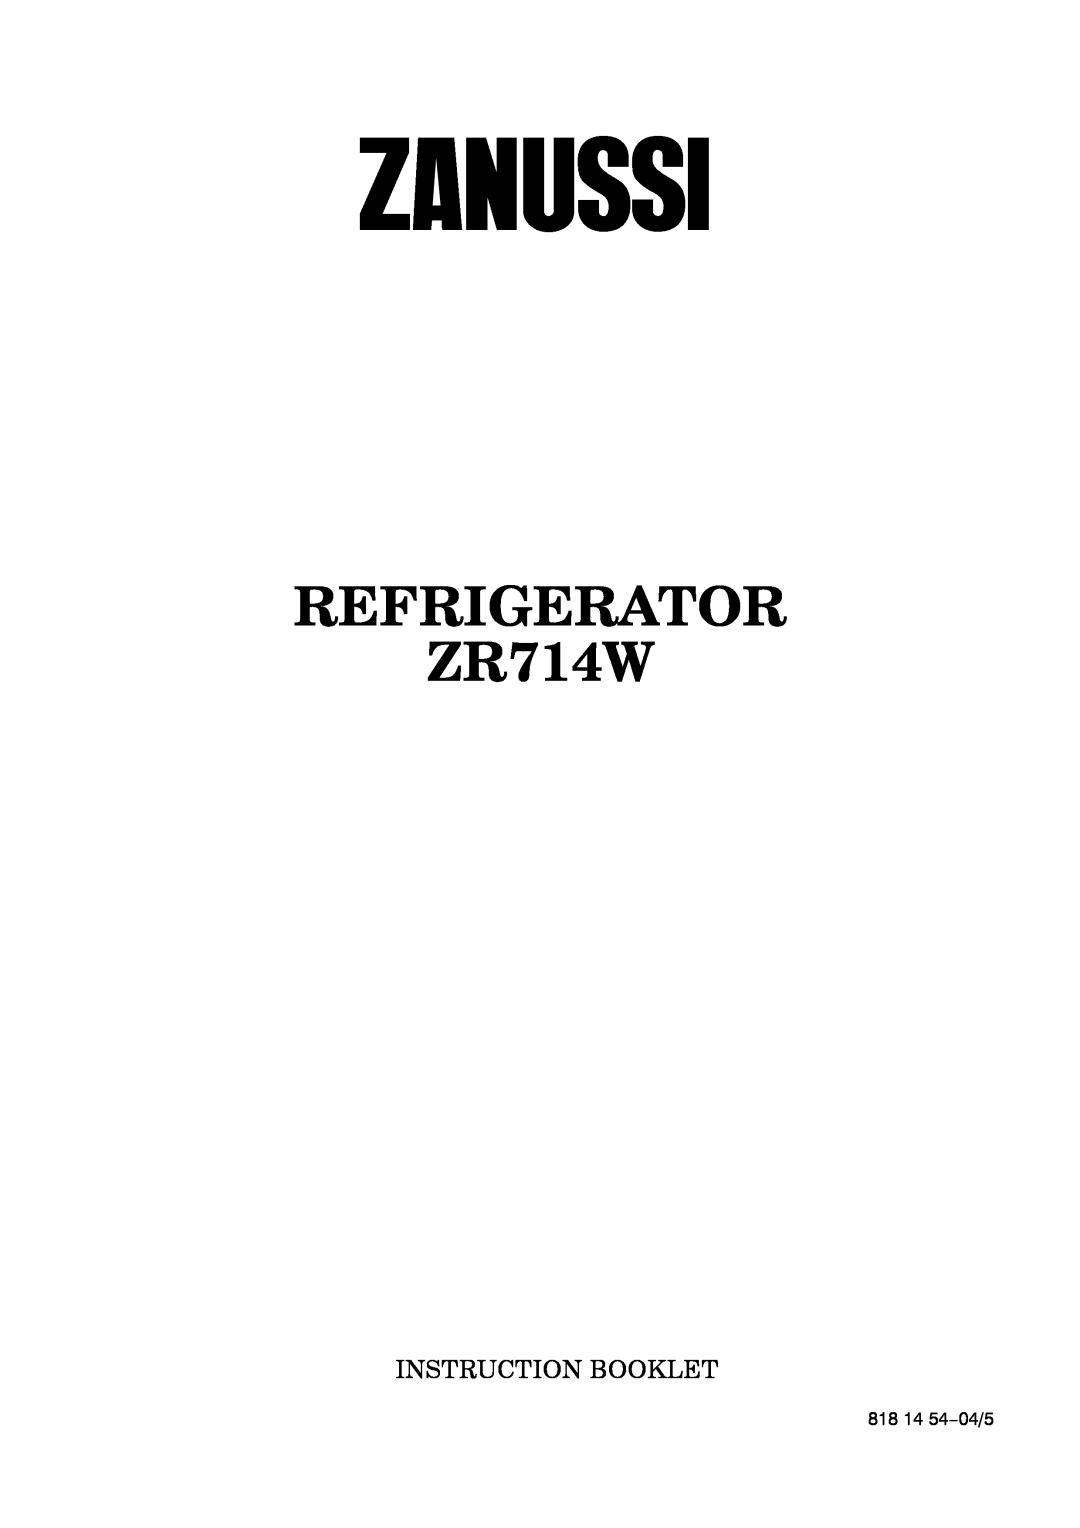 Zanussi manual REFRIGERATOR ZR714W, Instruction Booklet, 818 14 54--04/5 